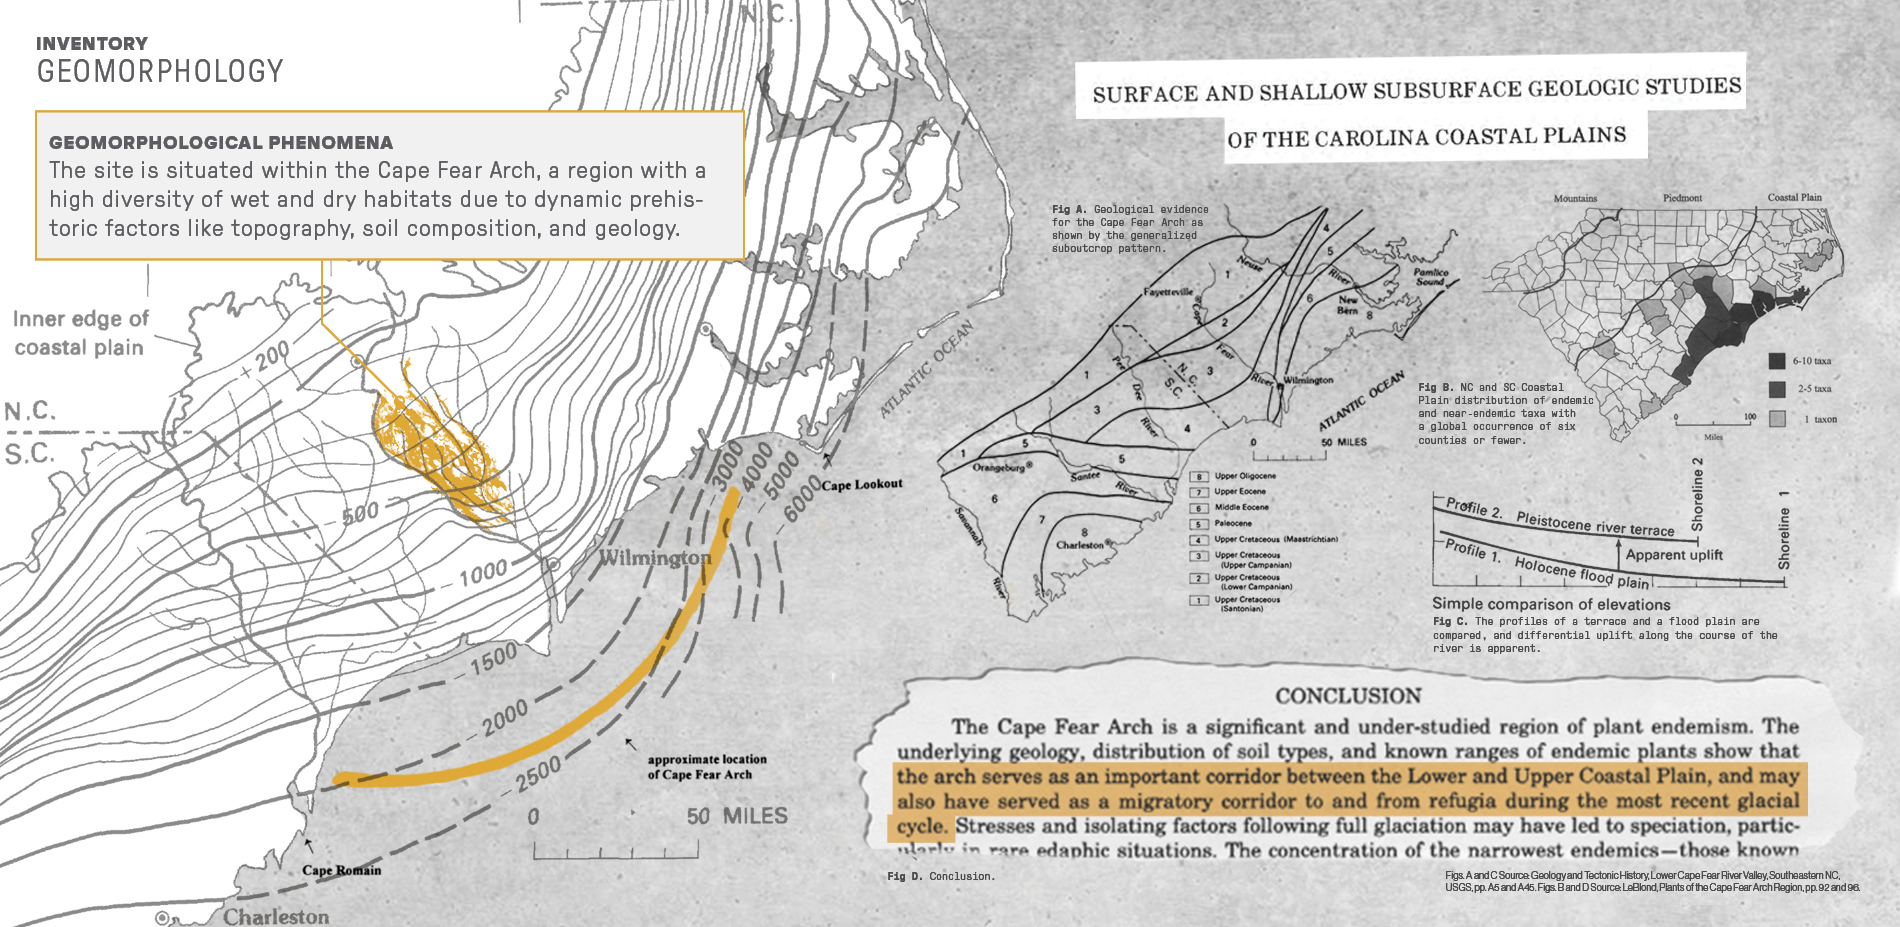 The Cape Fear Arch as Historical Biological Corridor